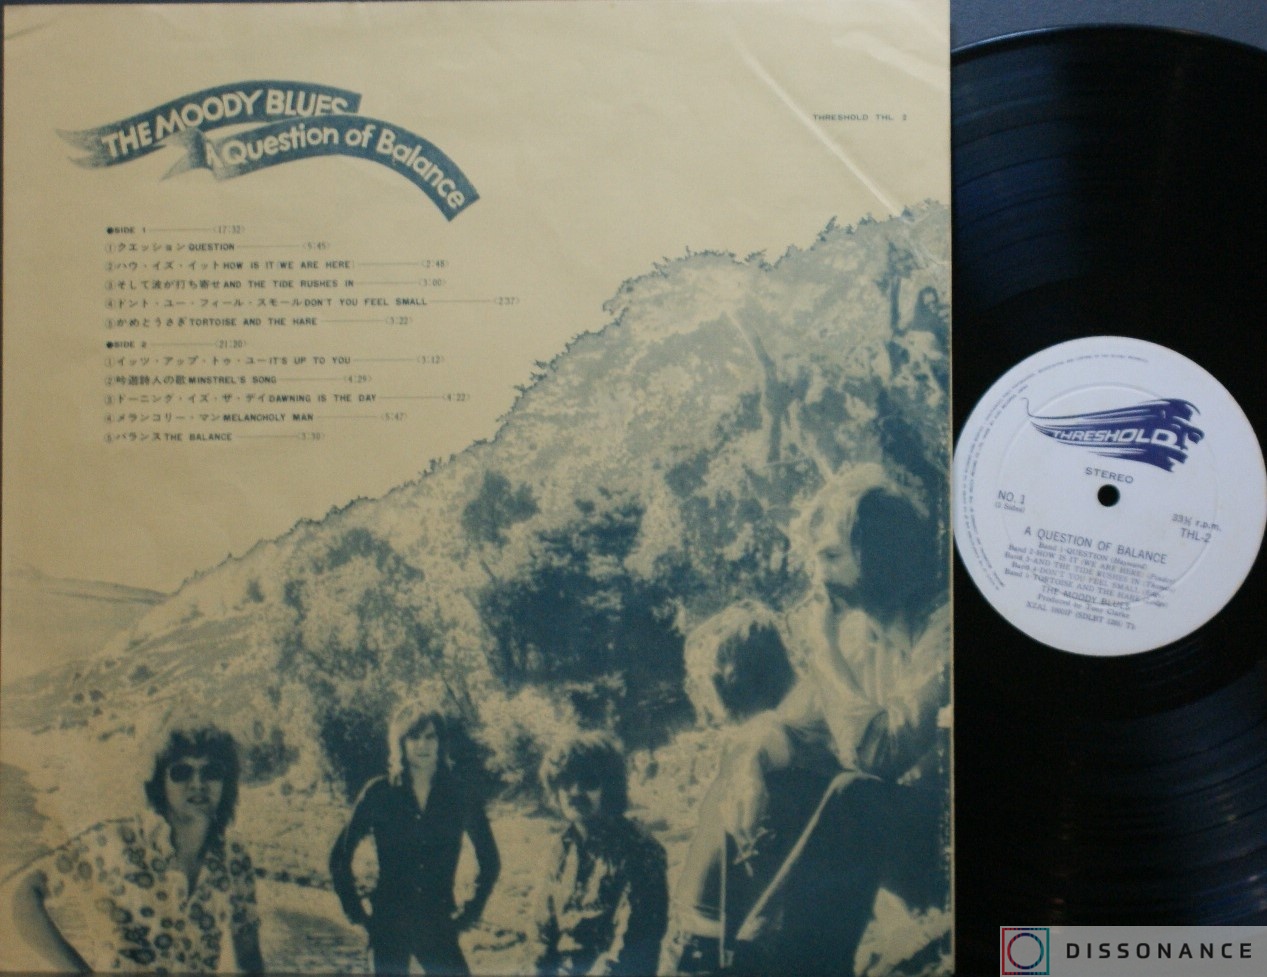 Виниловая пластинка Moody Blues - Question Of Balance (1970) - фото 2